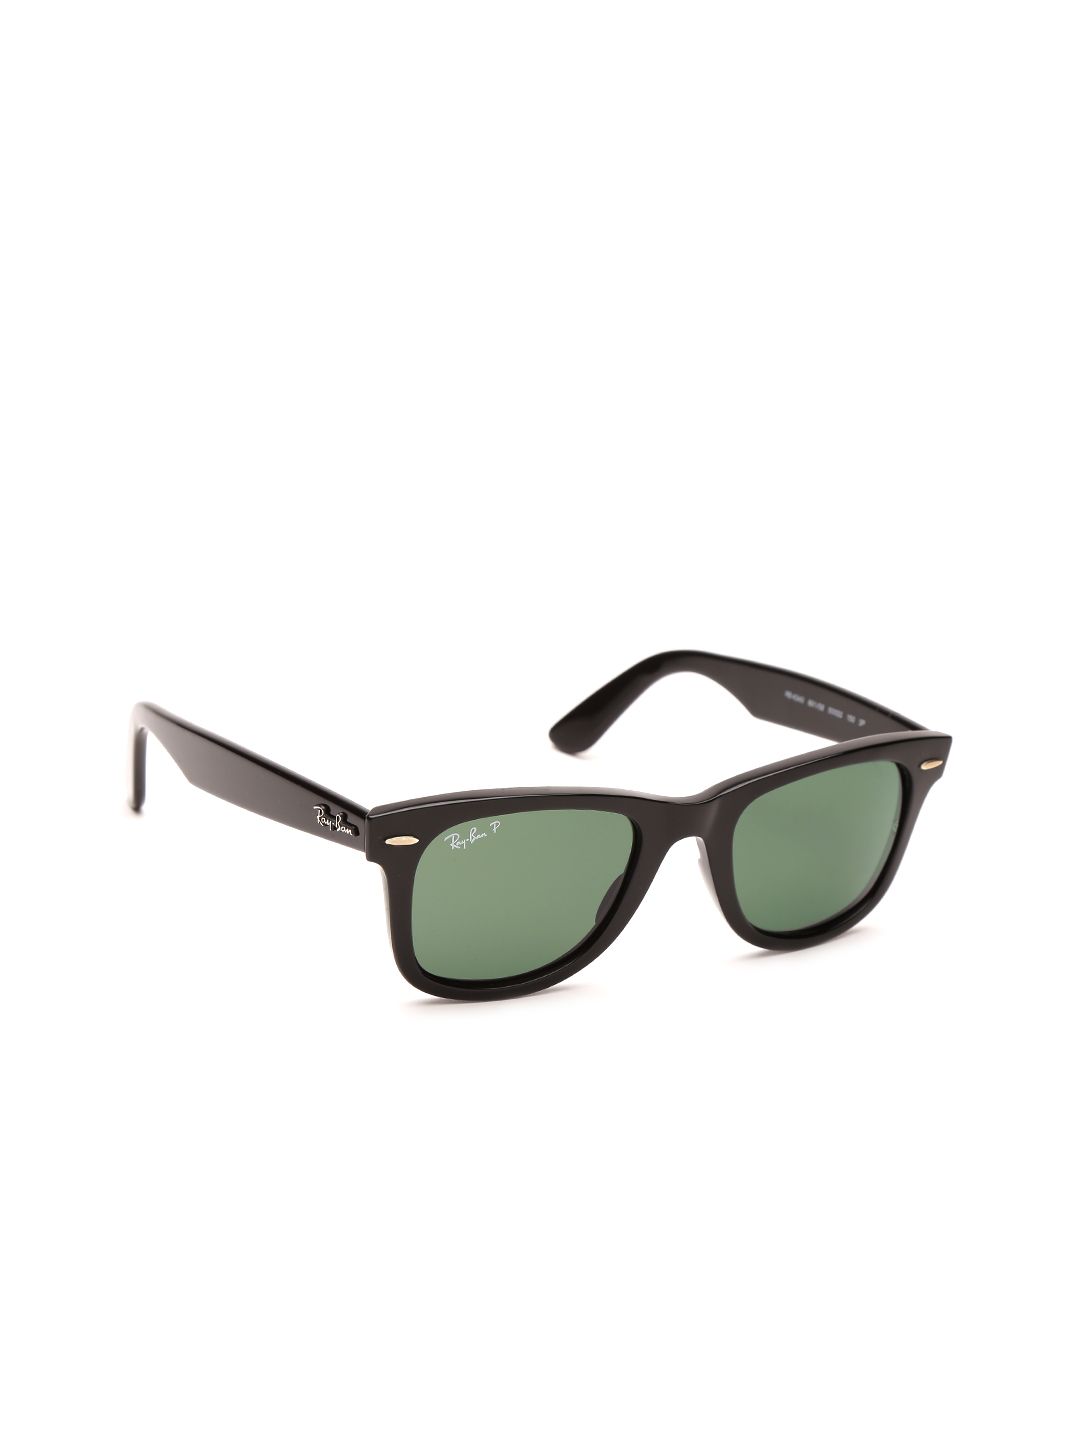 Ray-Ban Unisex Polarised Wayfarer Sunglasses 0RB4340601/5850-601/58 Price in India